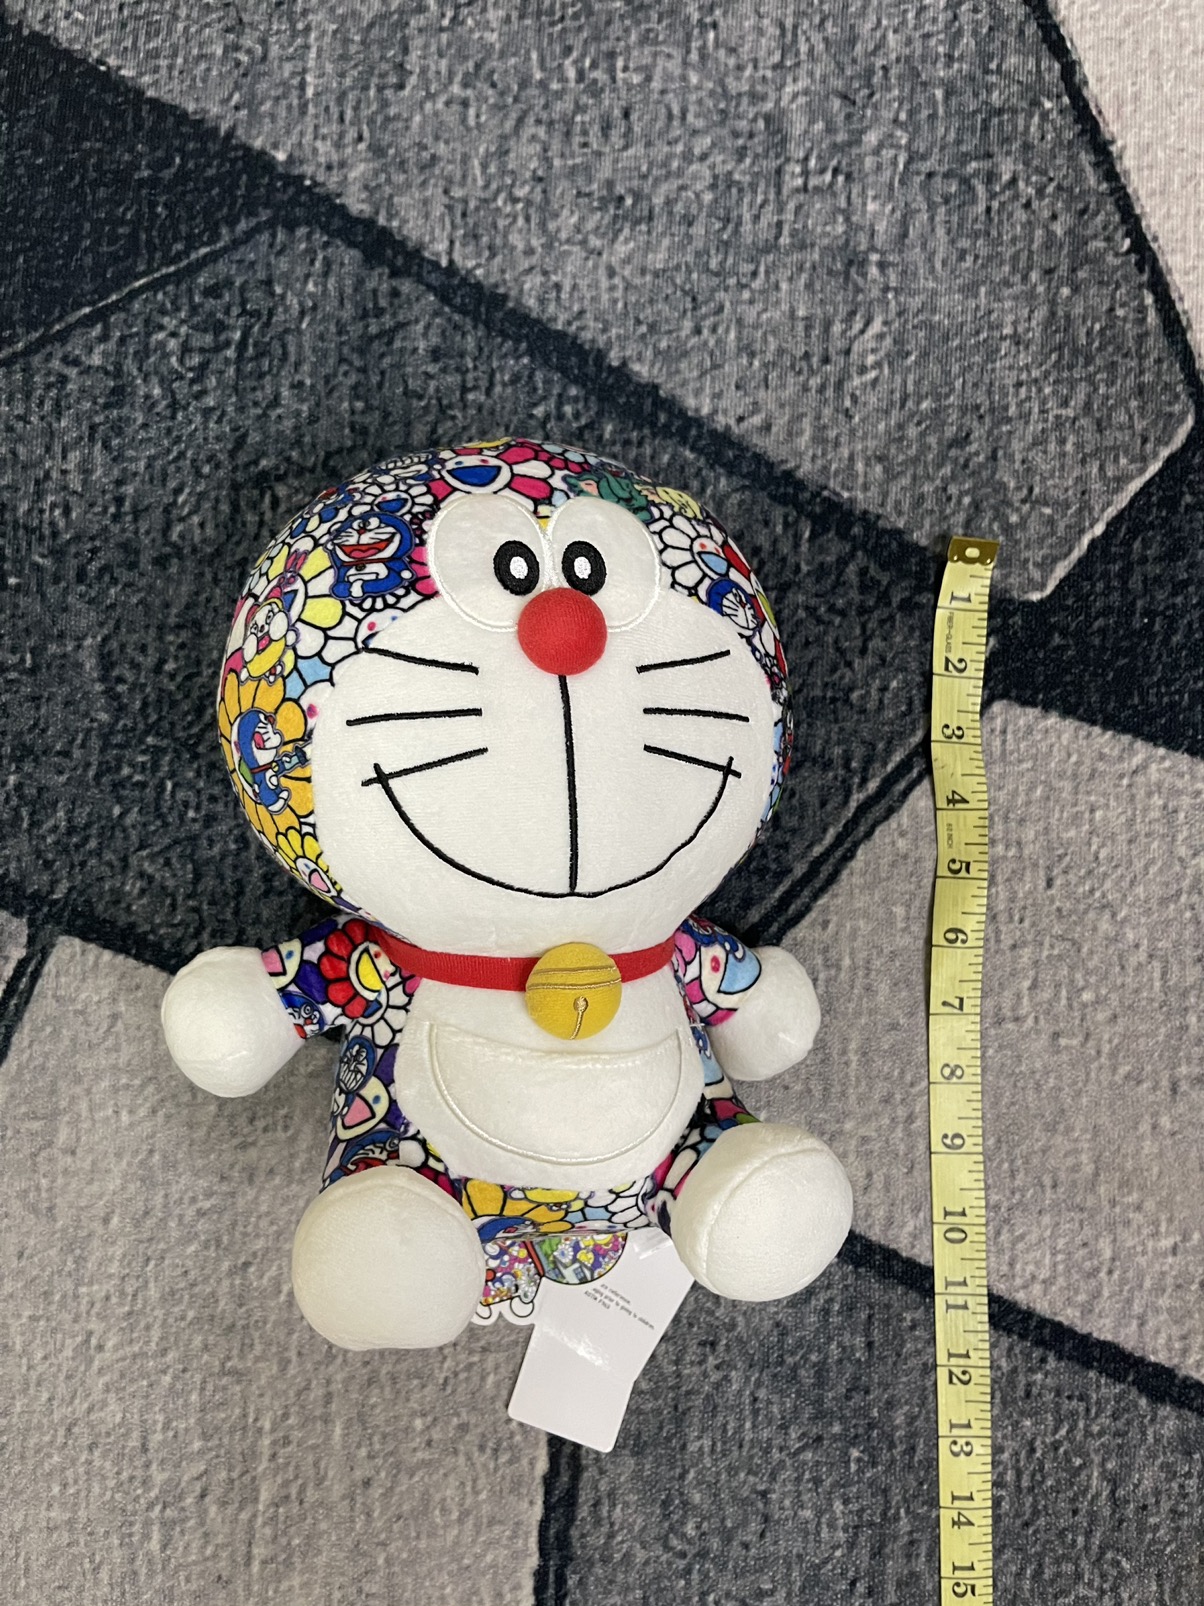 Japanese Brand - New Takashi Murakami Doraemon Toys Limited Edition - 5